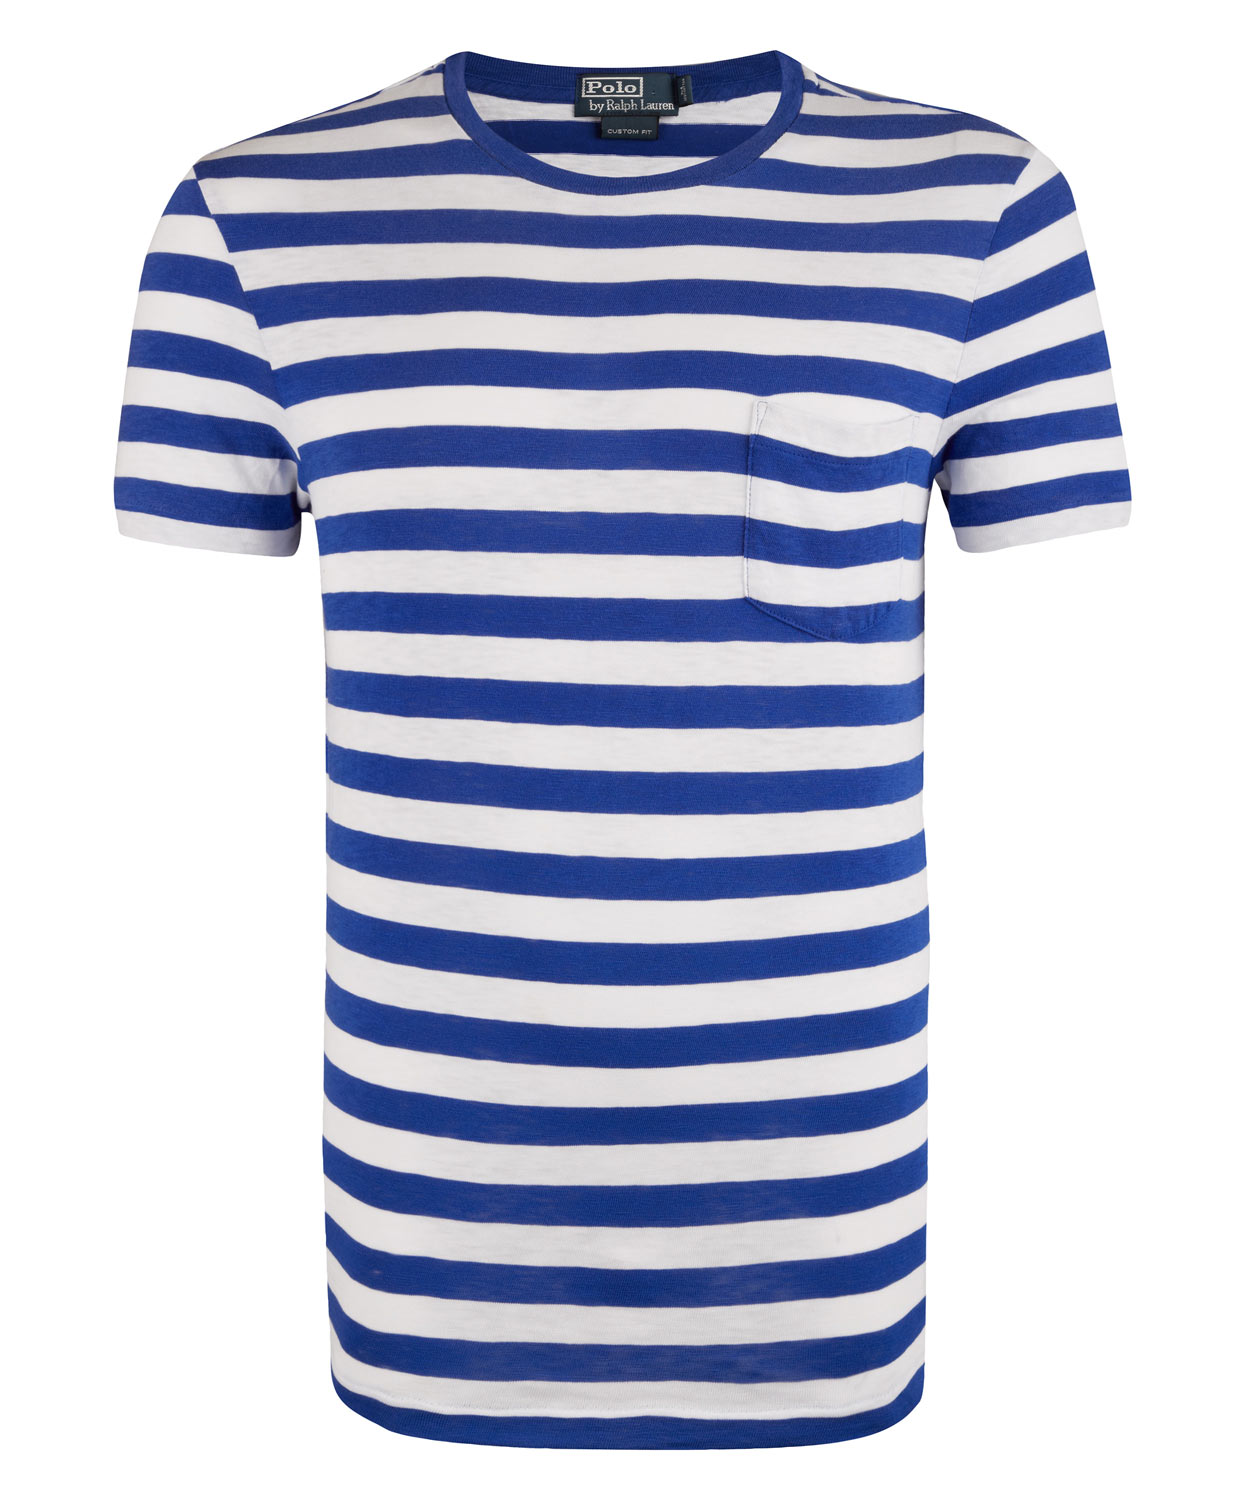 Lyst - Polo Ralph Lauren Blue and White Stripe Pocket Tshirt in Blue ...